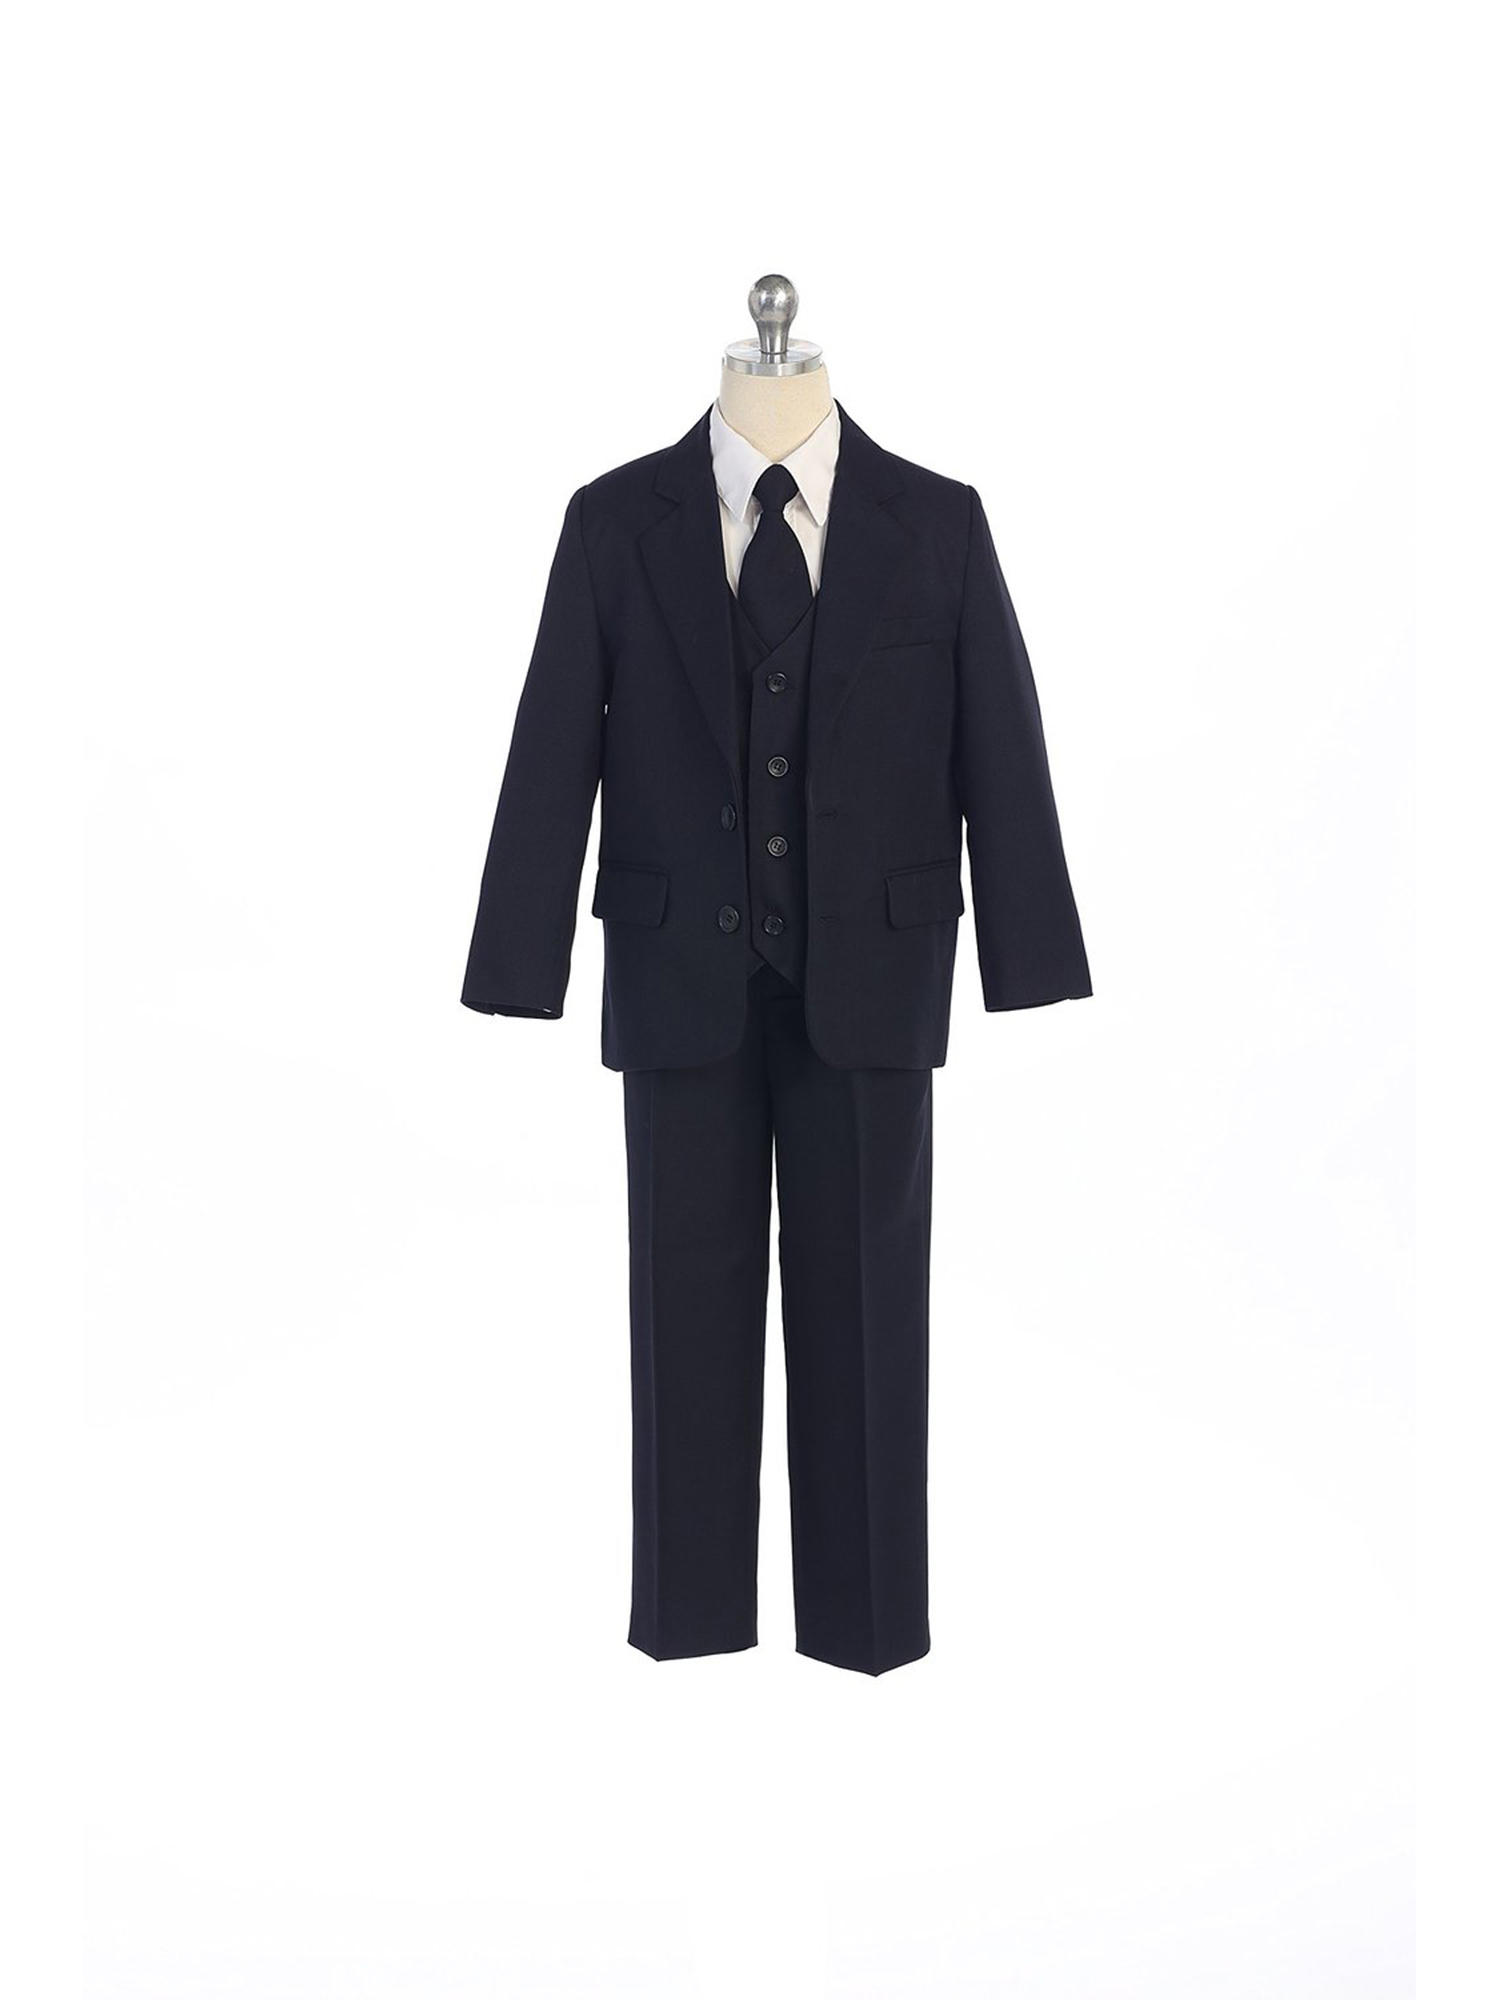 COLE Boys Suit with Shirt and Vest (5-Piece) - Navy Blue - Size 6